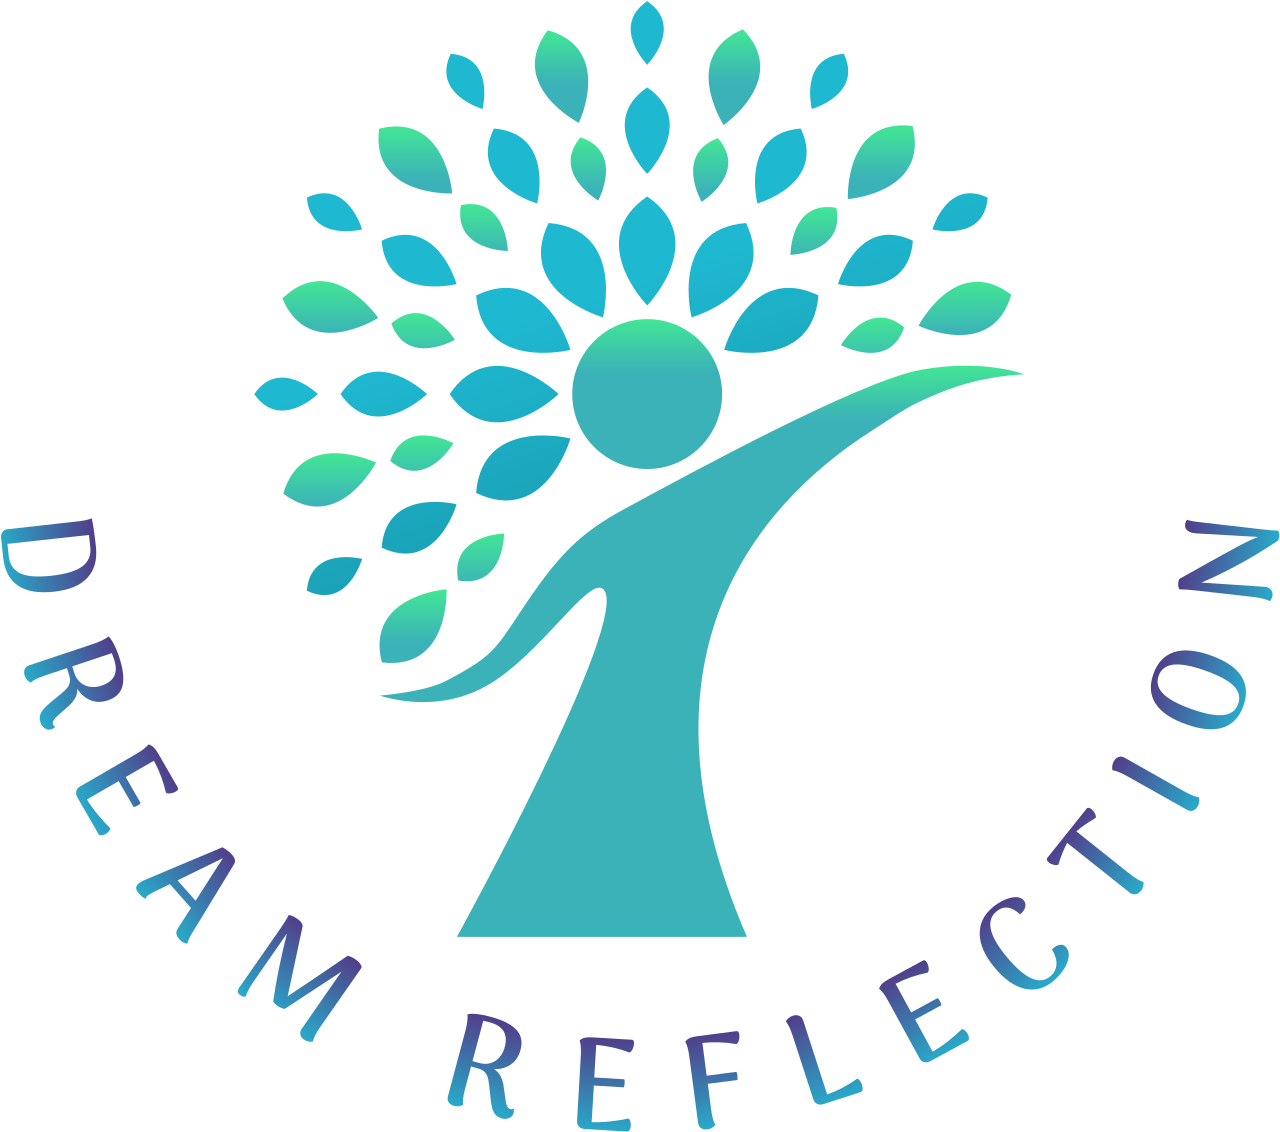 dream reflection's logo